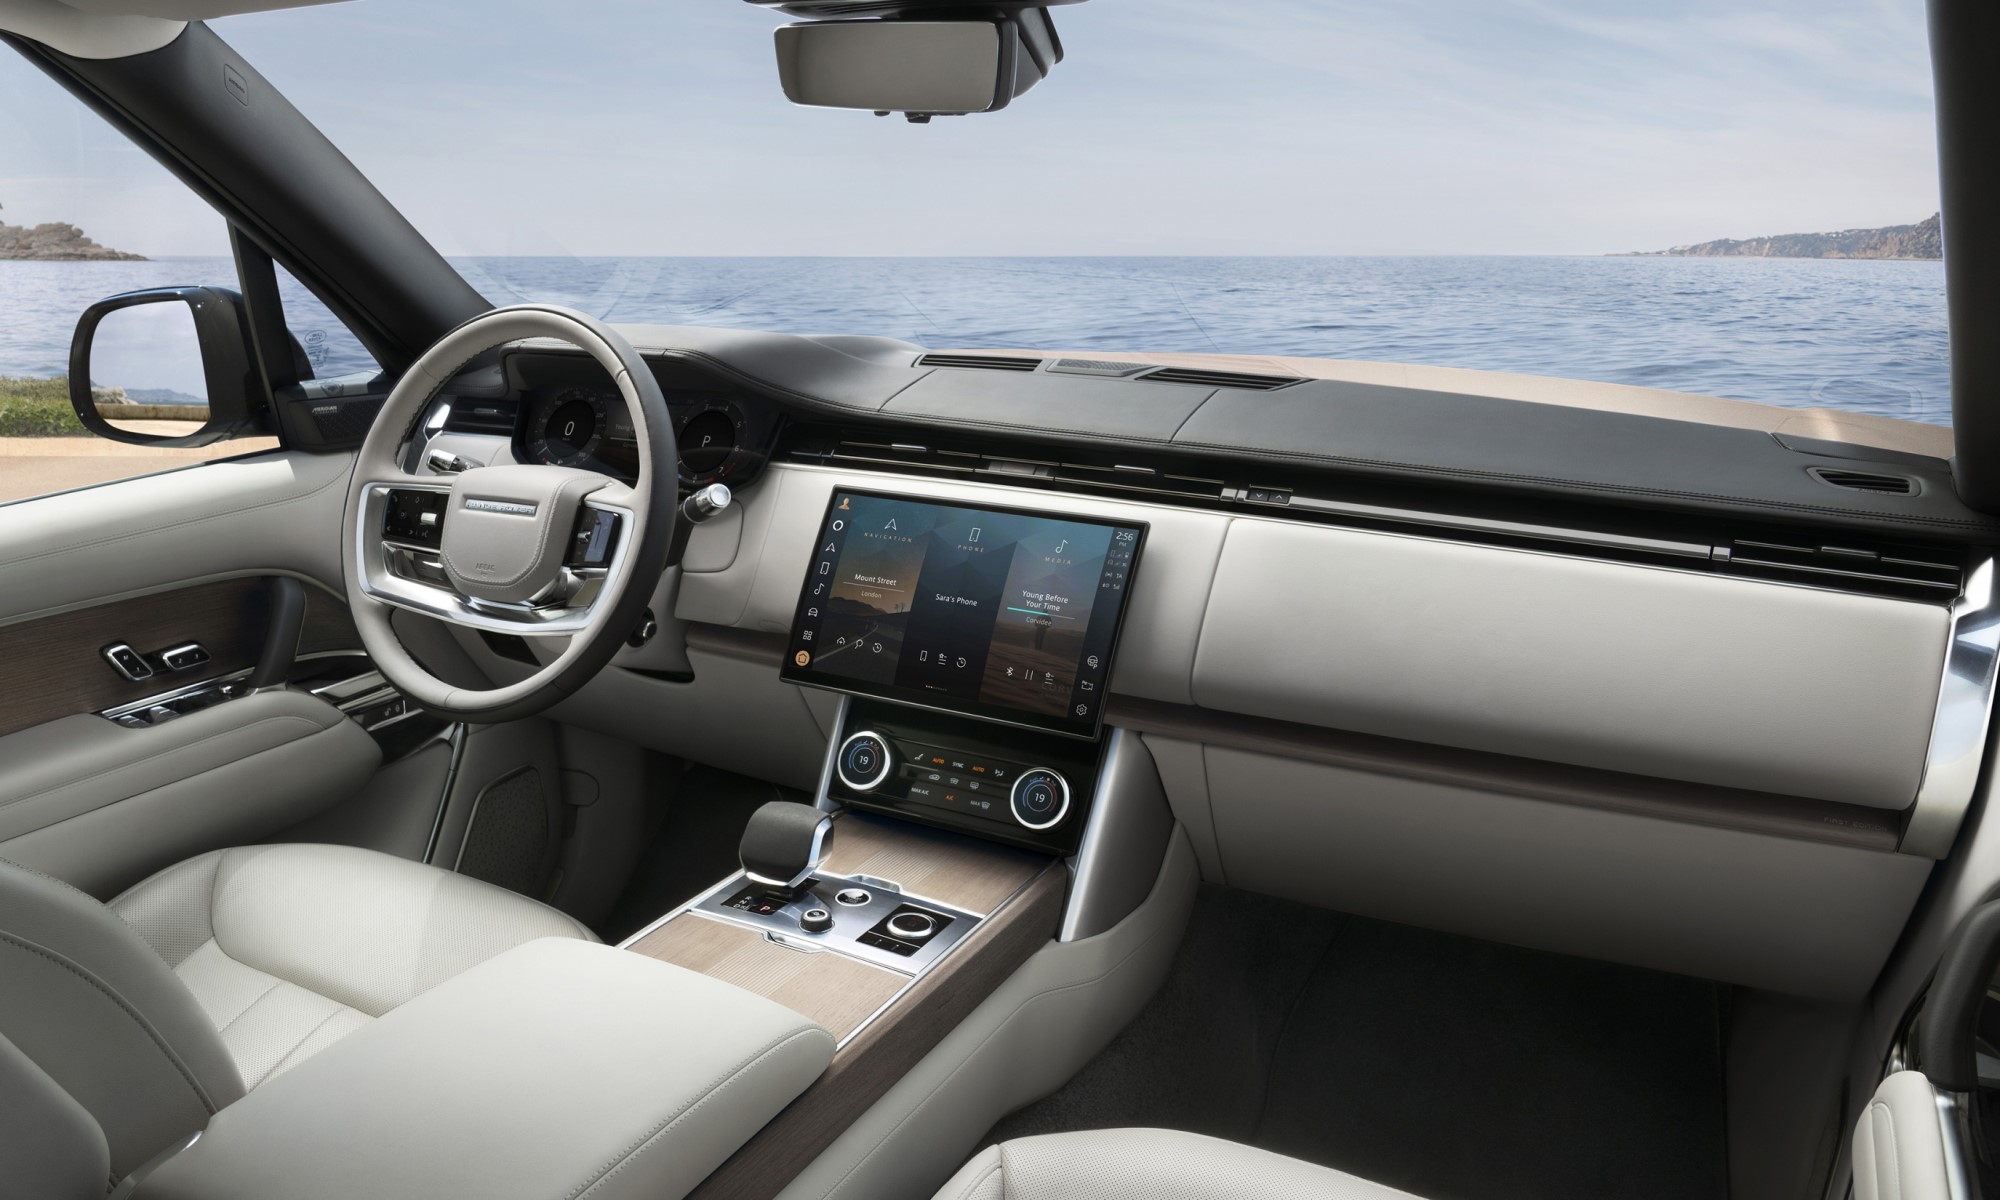 New Range Rover interior